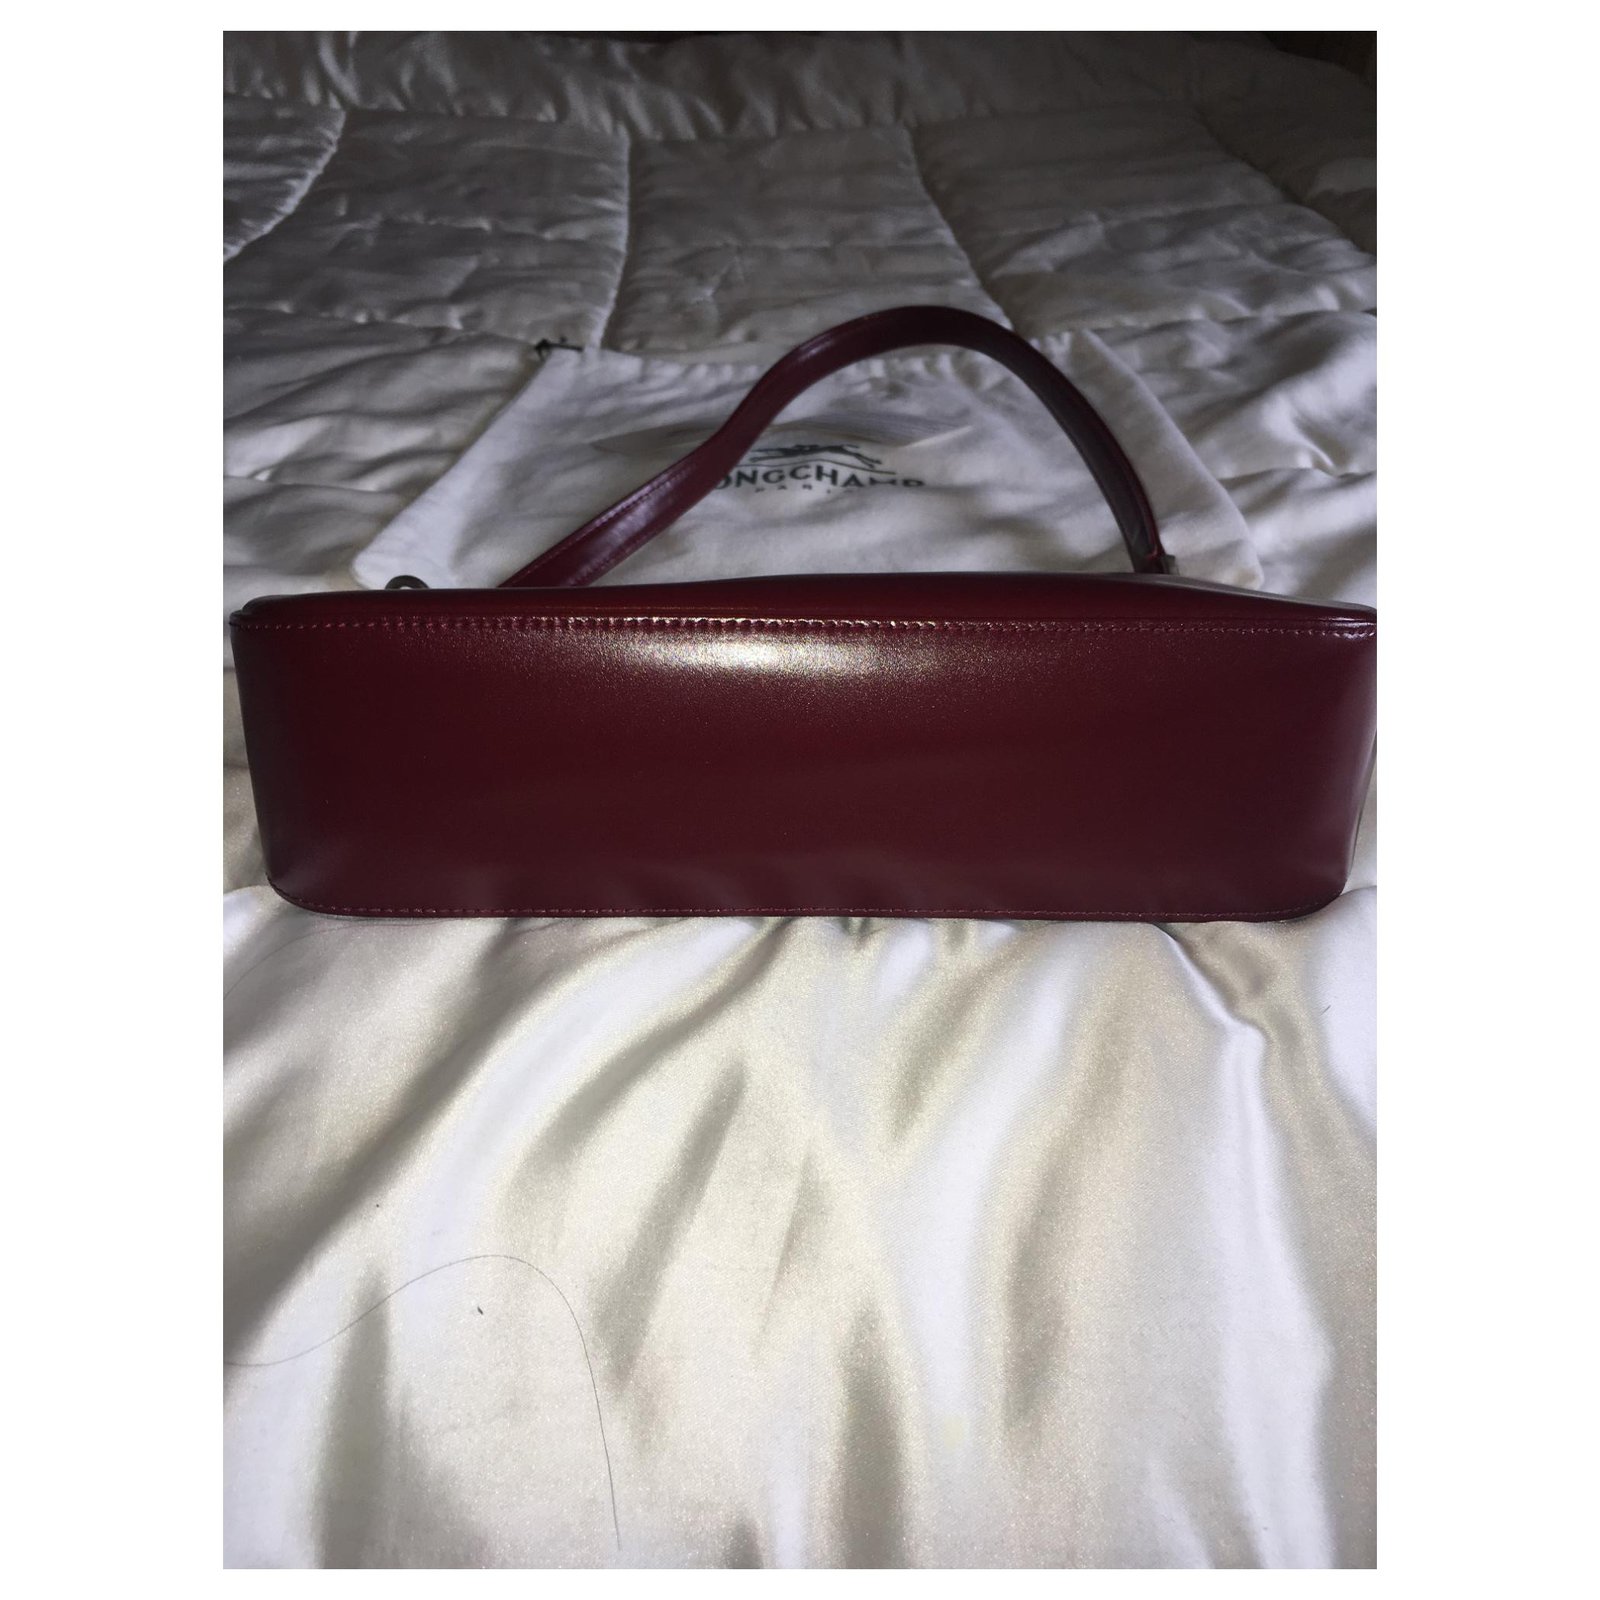 Vintage Longchamp bag, Fuseau model, cowhide leather in dark fuchsia /  burgundy tones